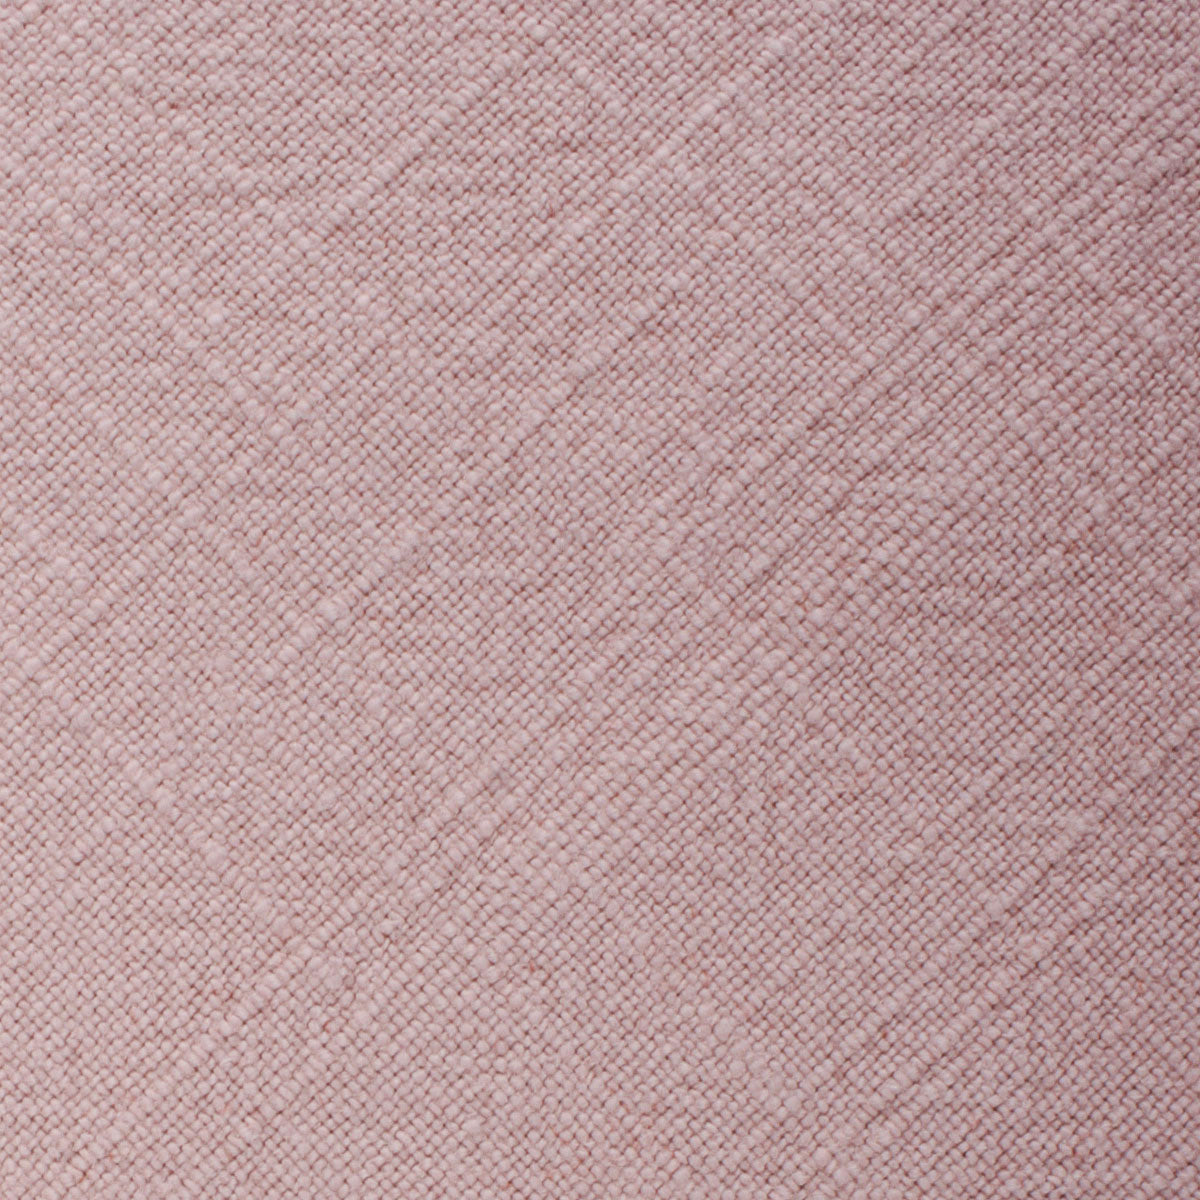 Dusty Rose Quartz Linen Skinny Tie Fabric